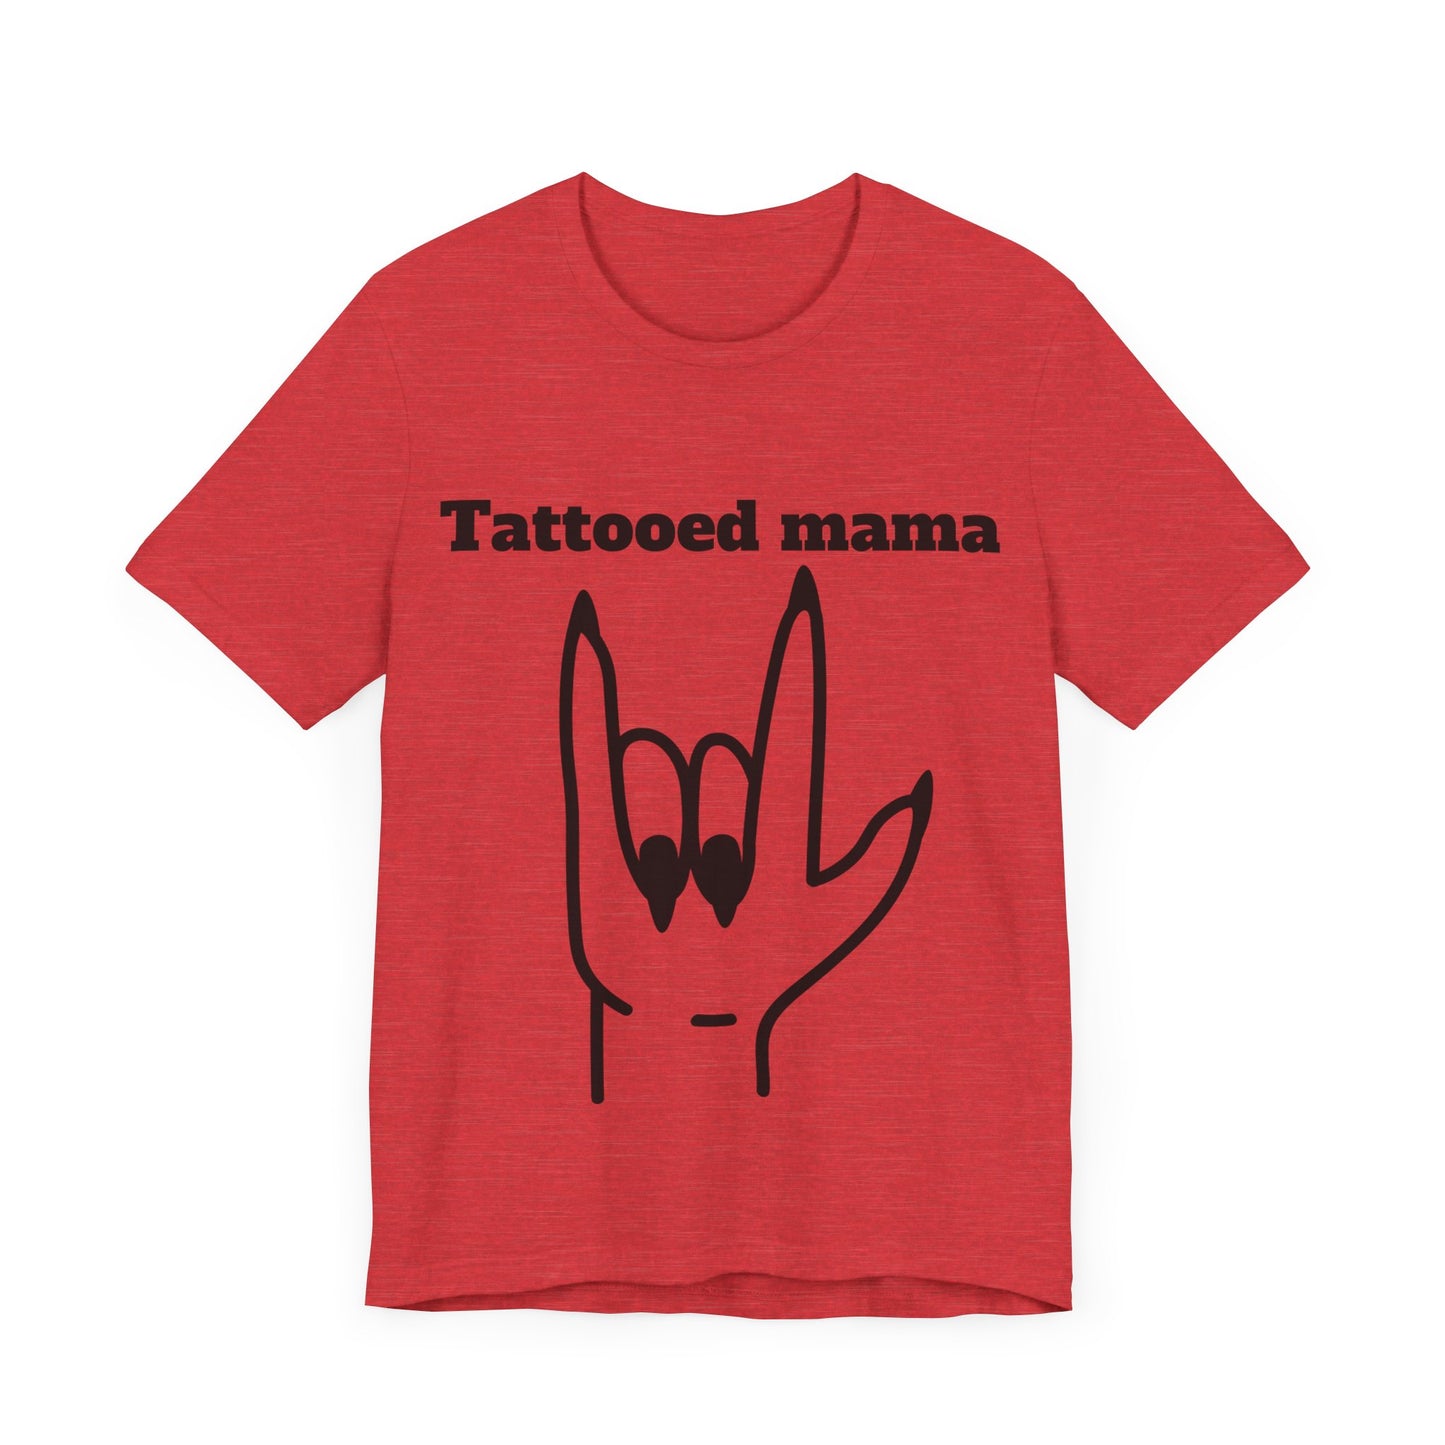 "Tattooed mama" Short Sleeve Tee